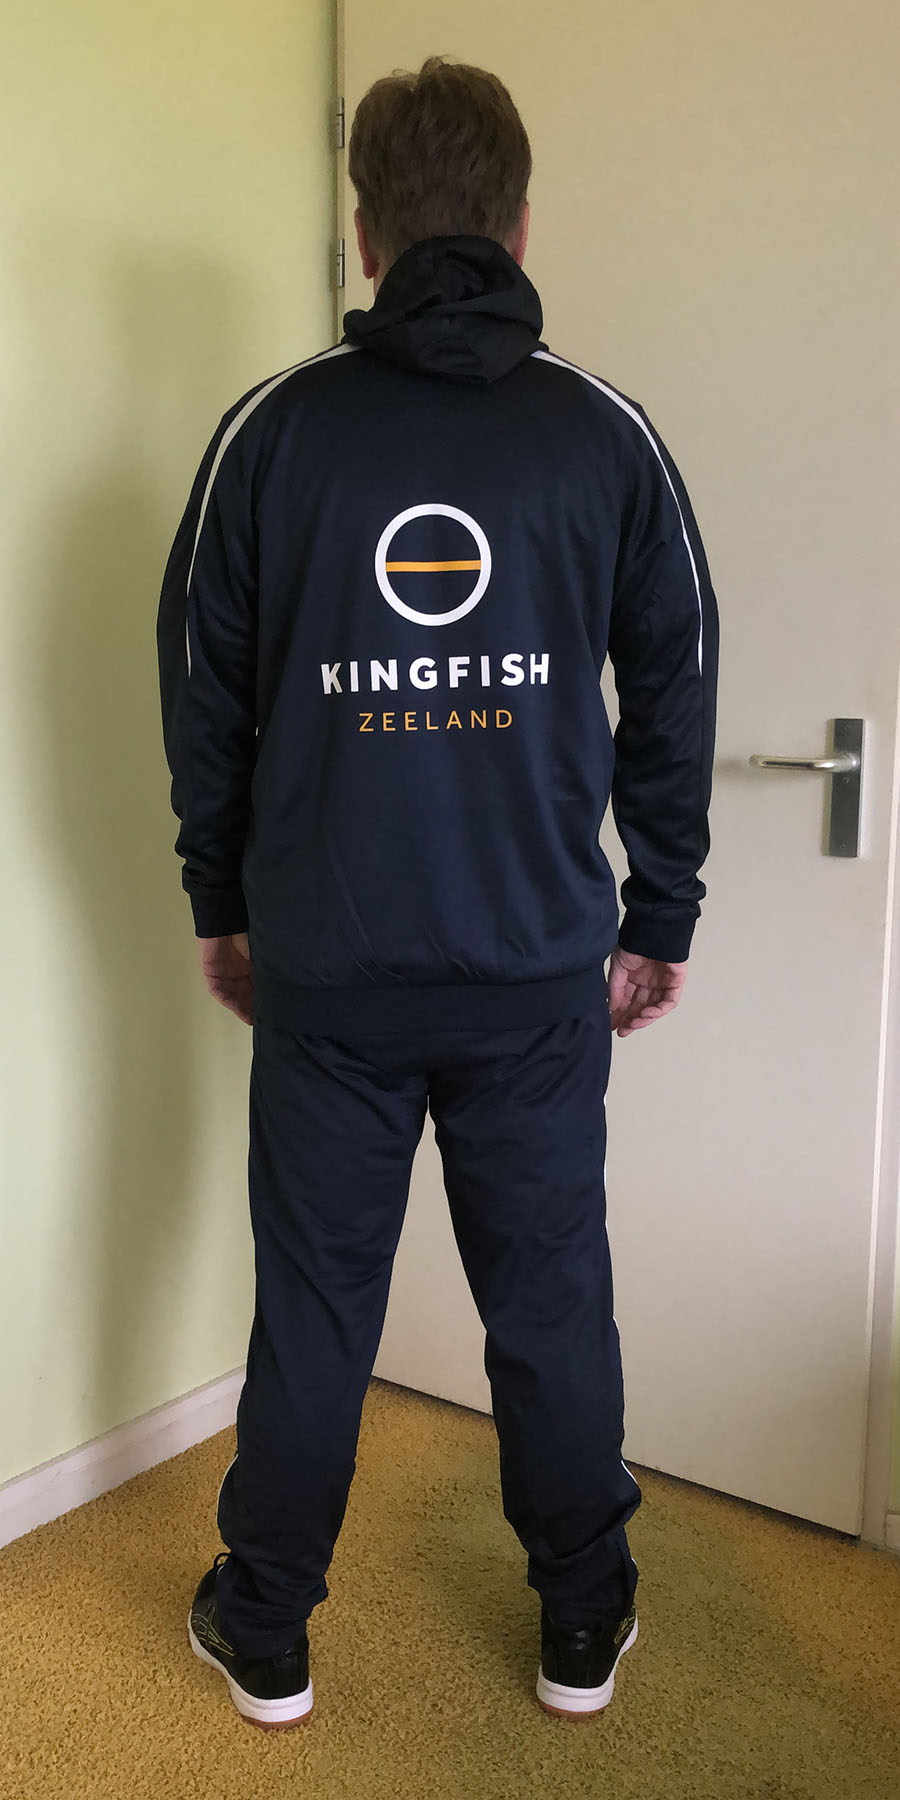 Kingfish Zeeland